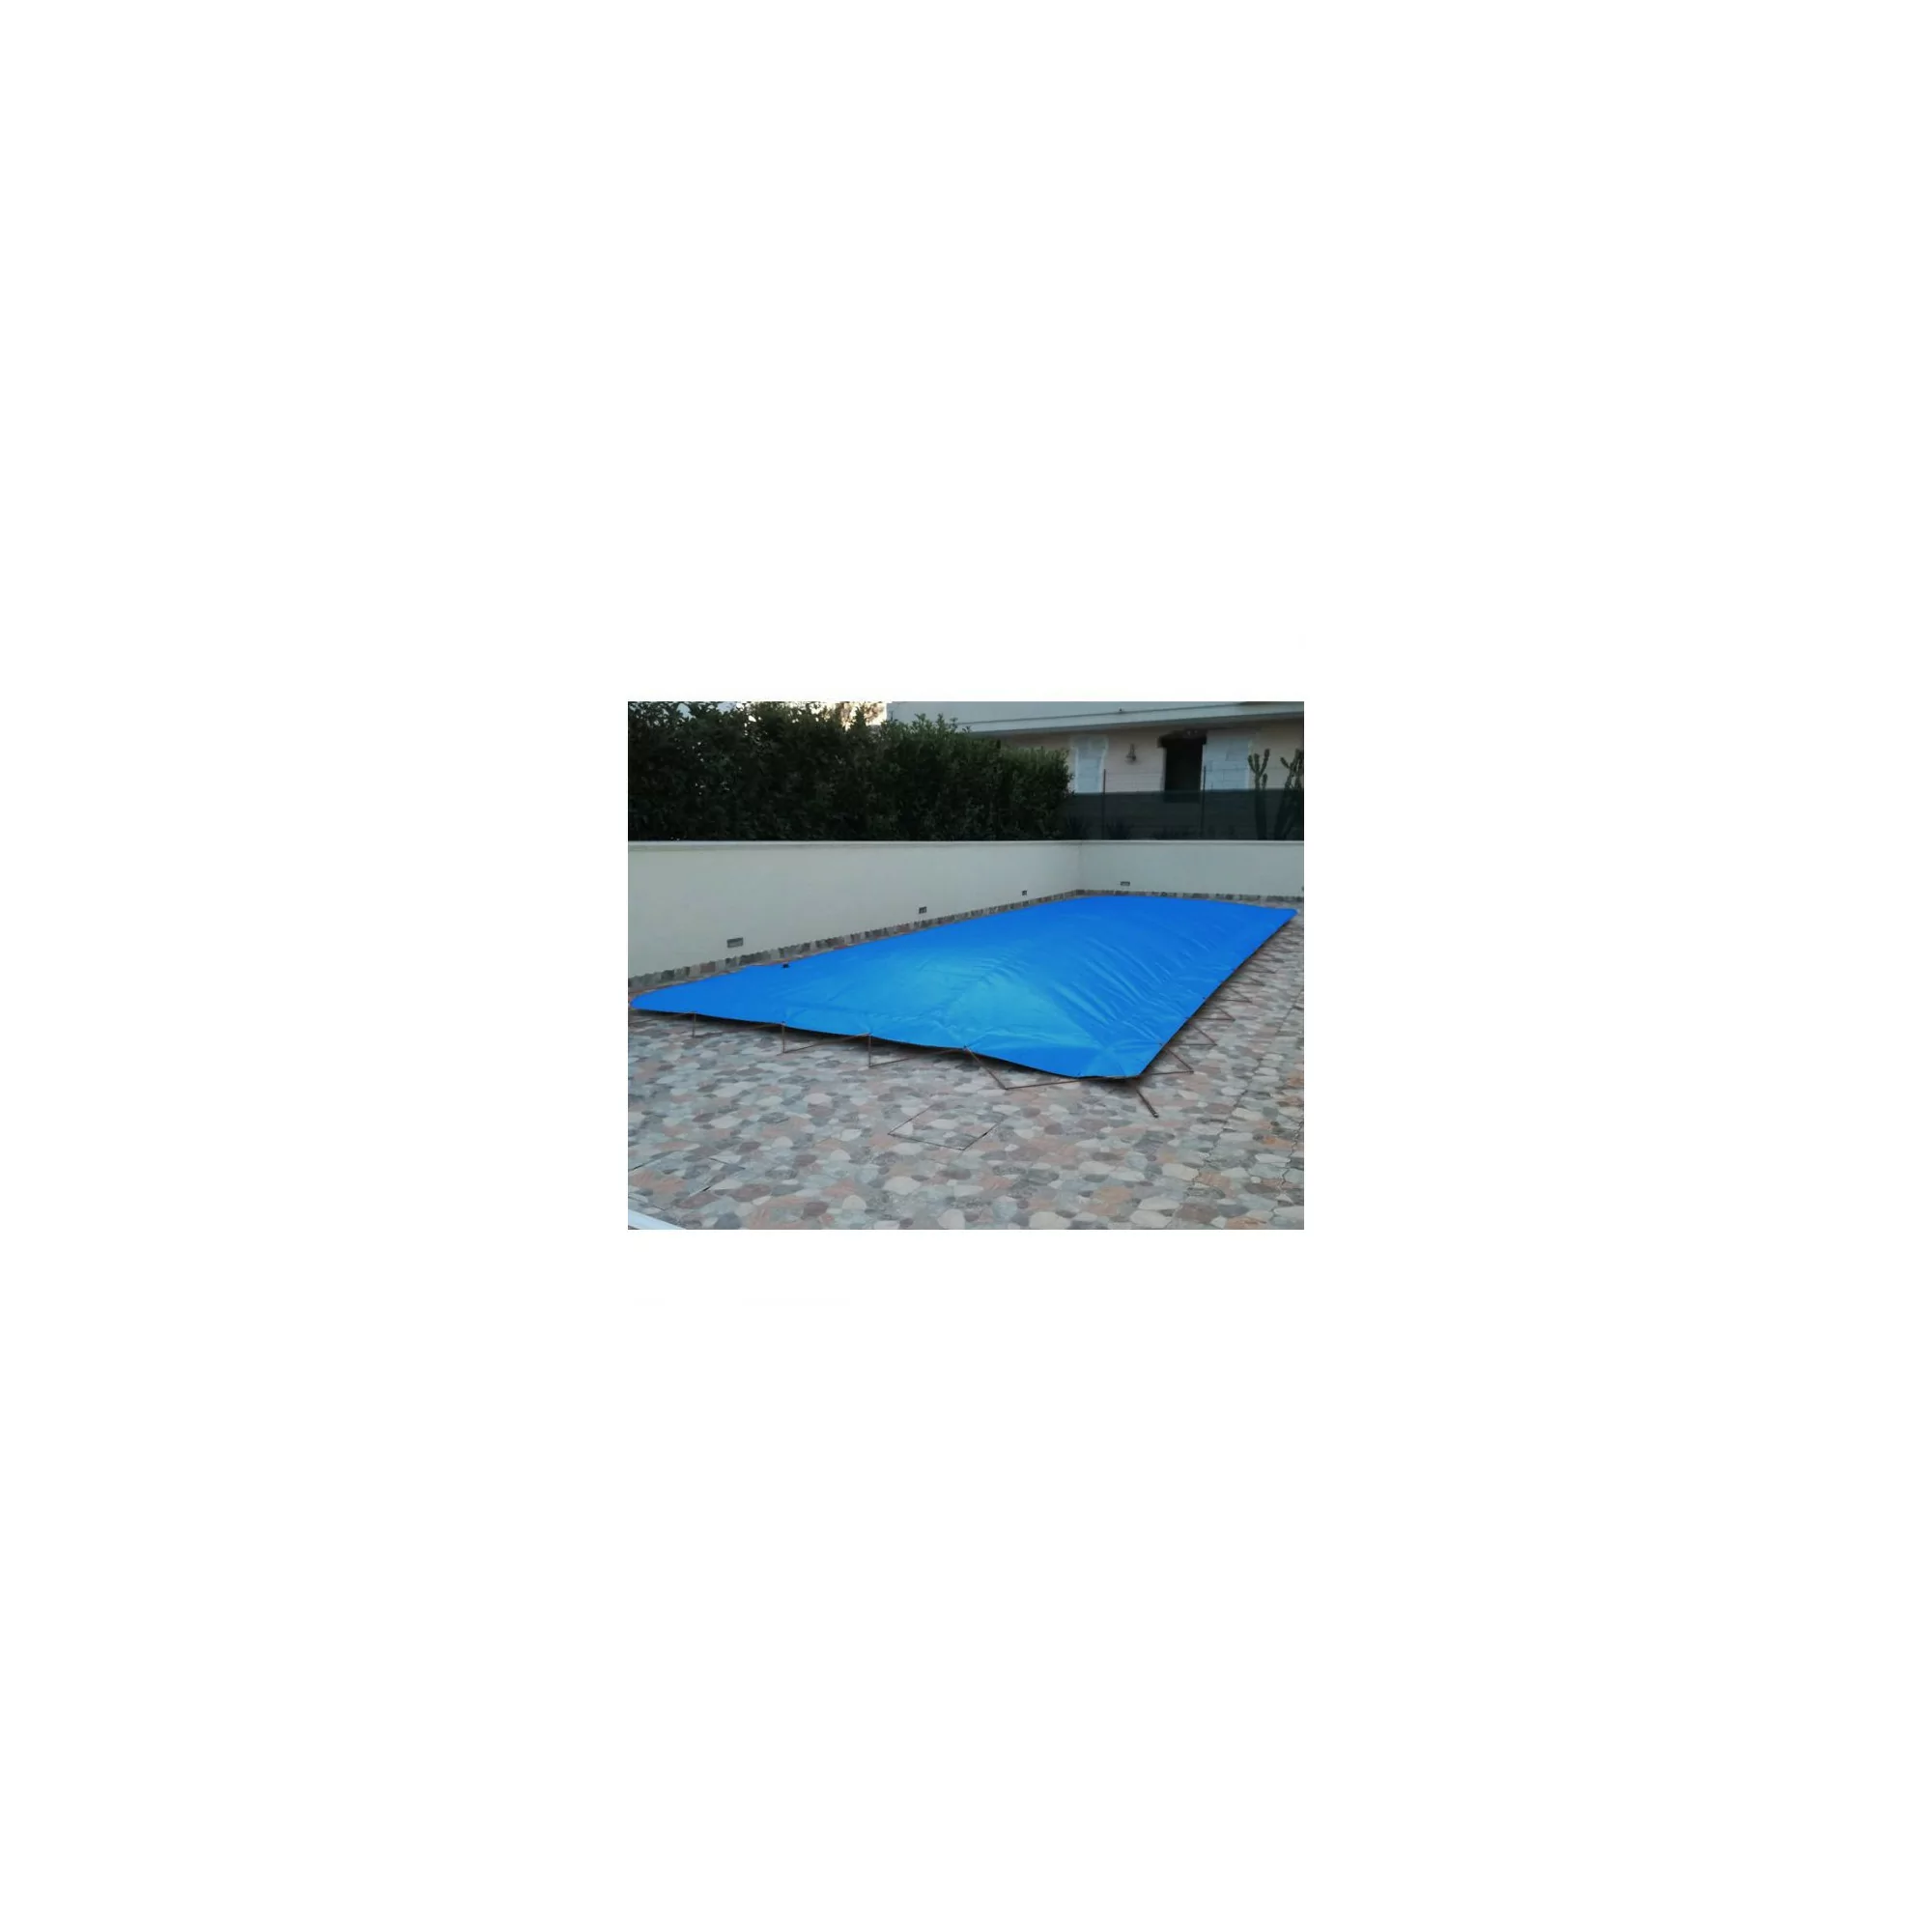 Cobertor de invierno inflable para piscina AIRCOVER M²